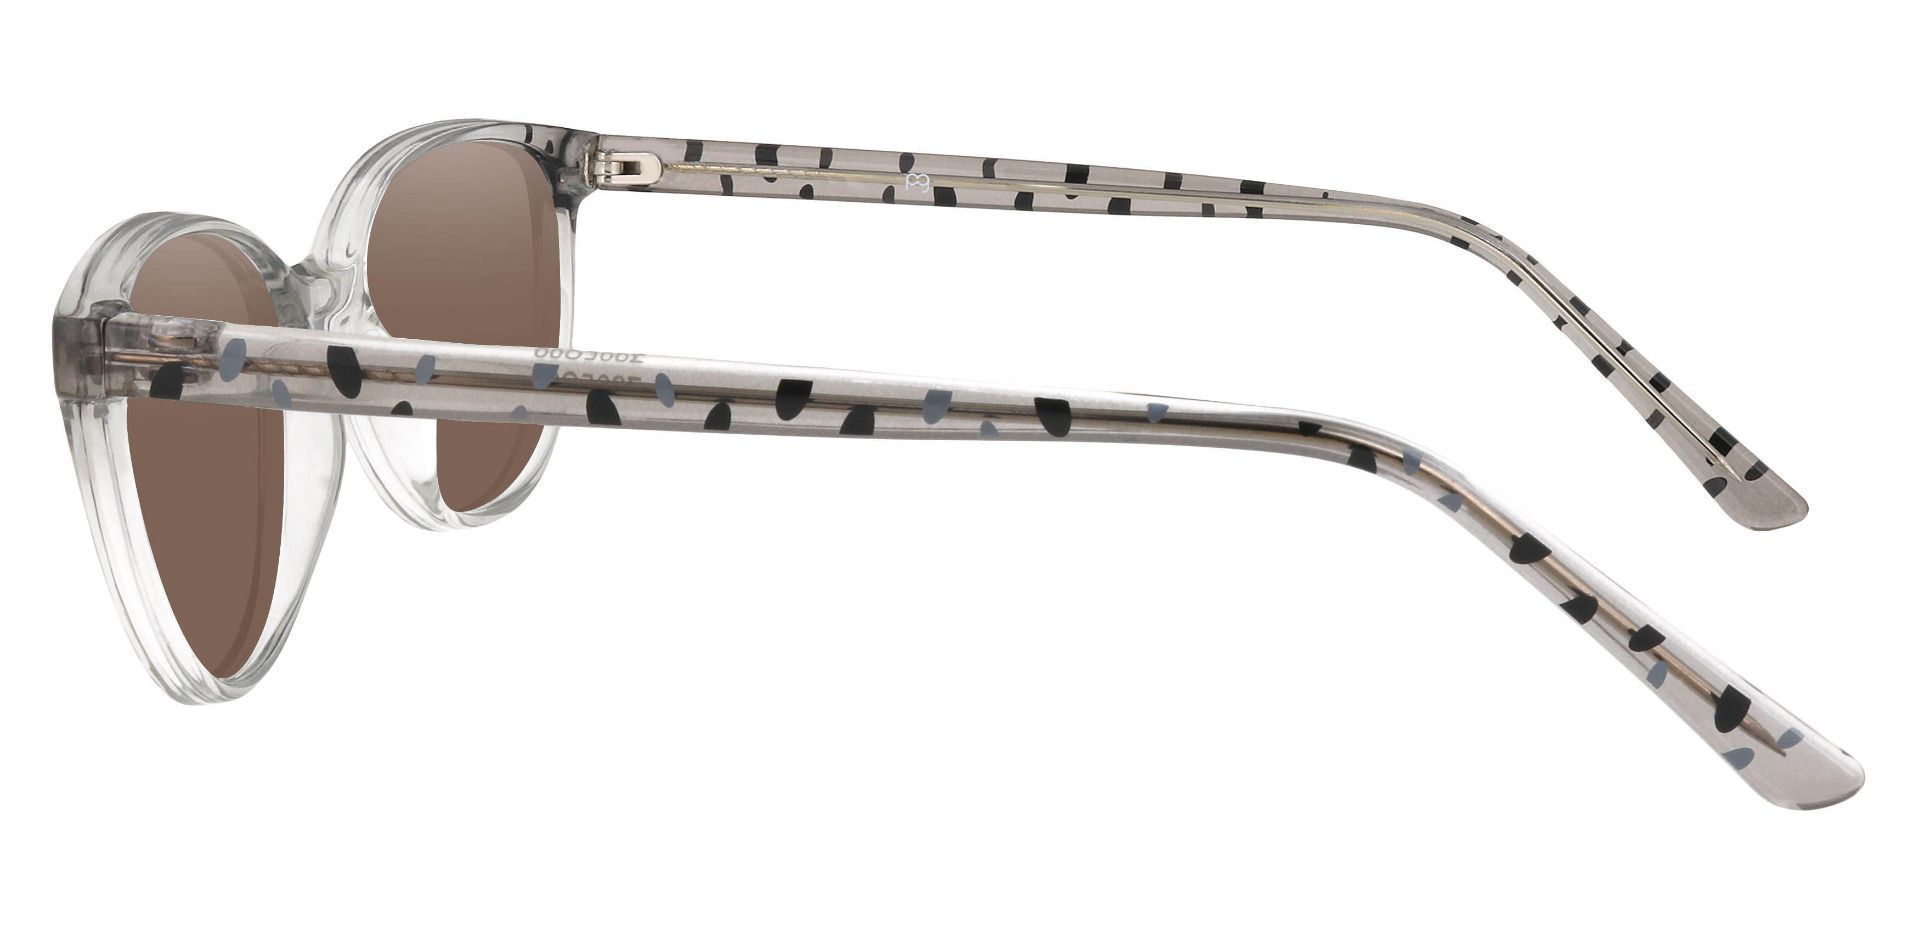 Carma Oval Prescription Sunglasses - Clear Frame With Brown Lenses